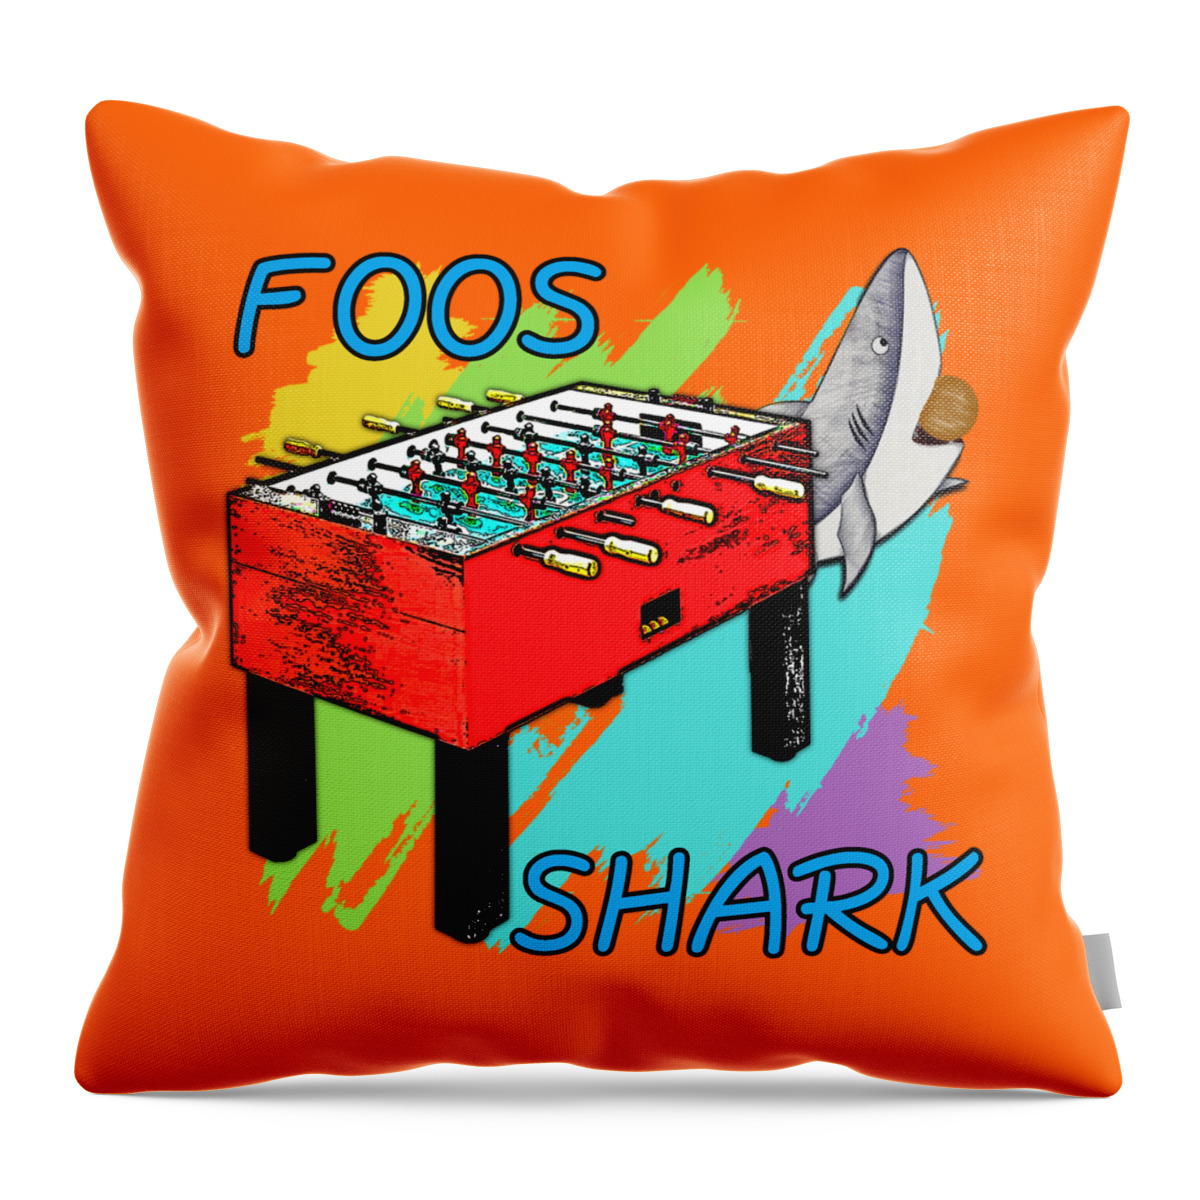 Foos Shark Throw Pillow featuring the digital art Foos Shark by David G Paul